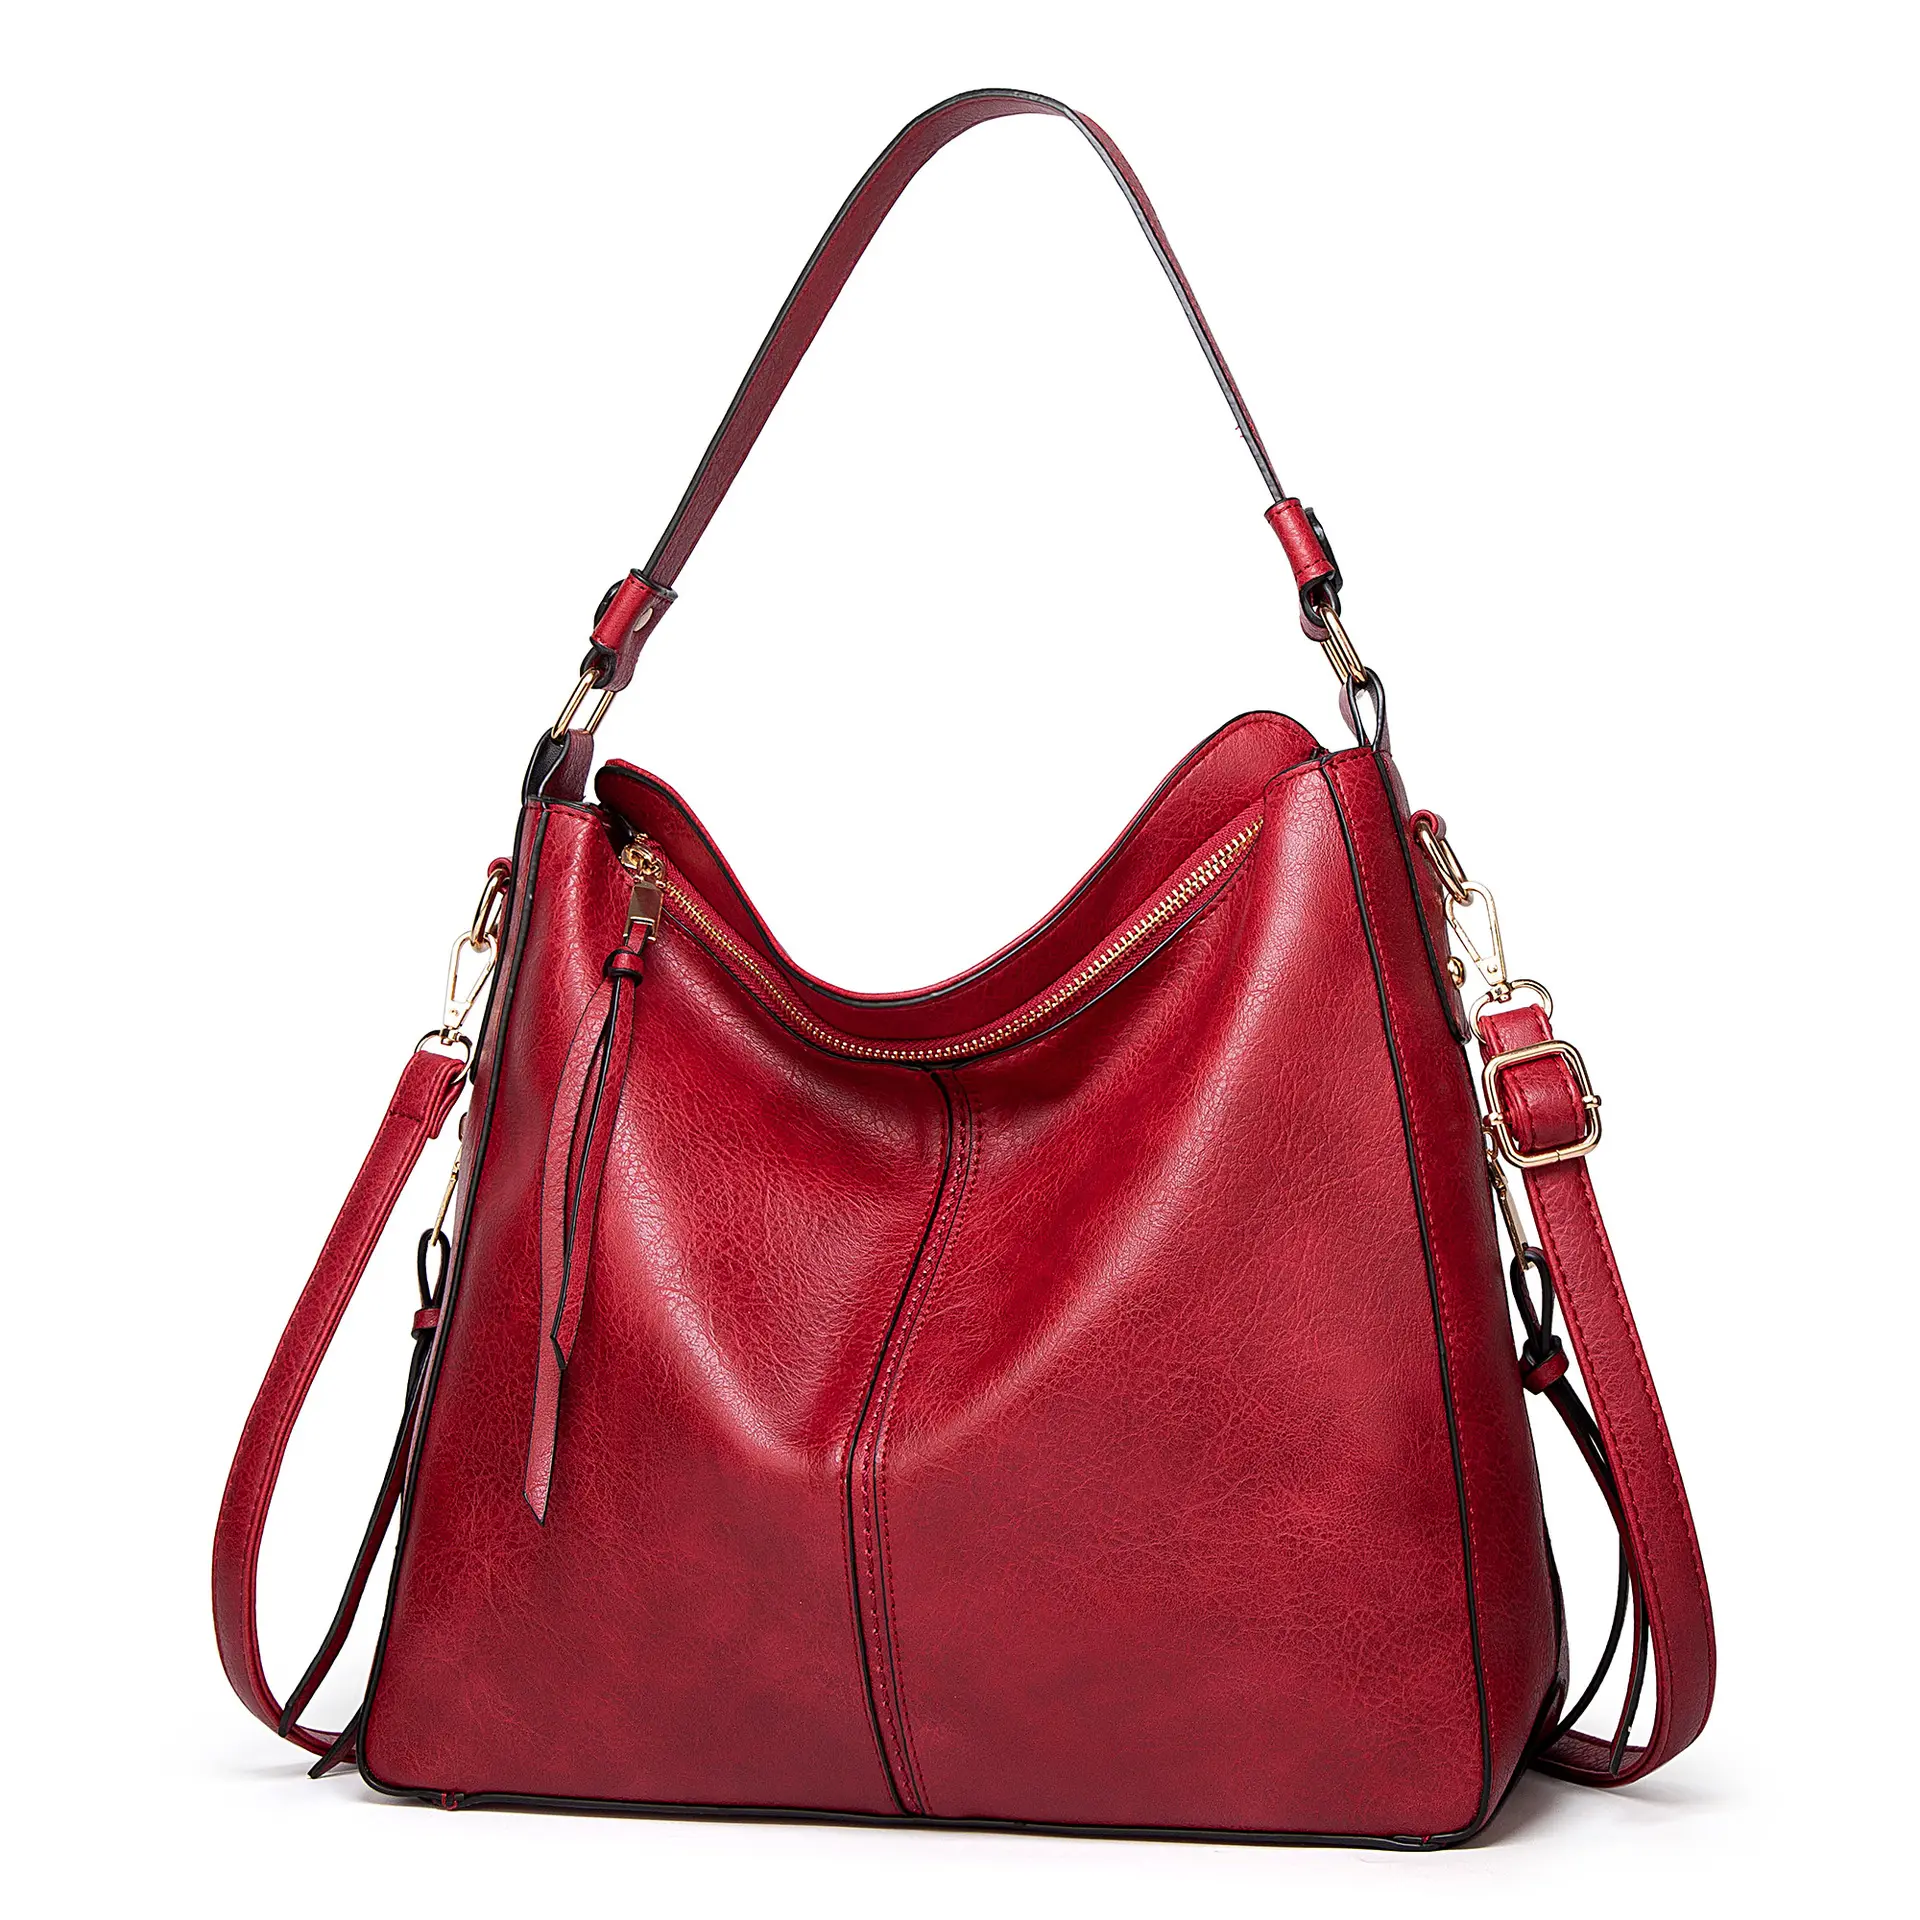 Hot sale ladies Handbags Large Tote Shoulder Bag Top Handle Satchel Bag for Work